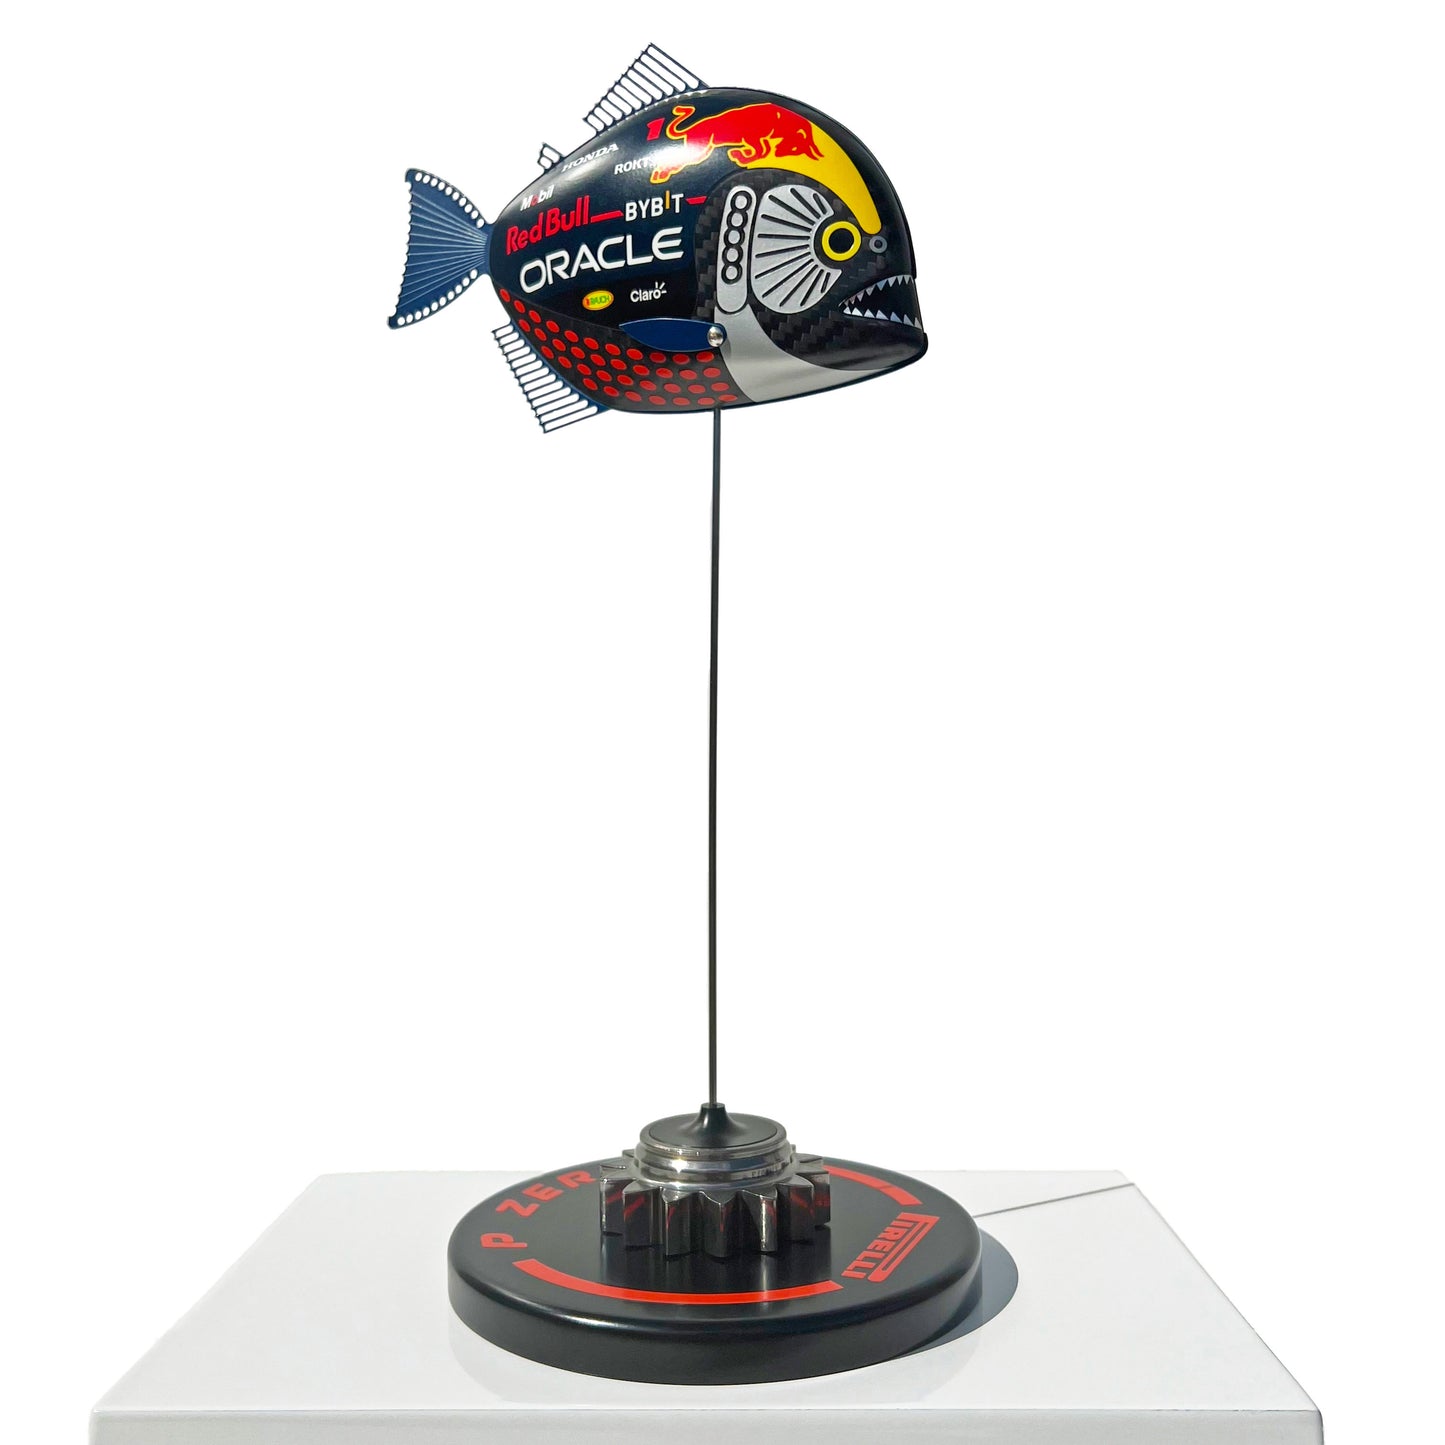 Carbon Fibre Piranha sculpture with 2023 RedBull Racing Formula One Livery.